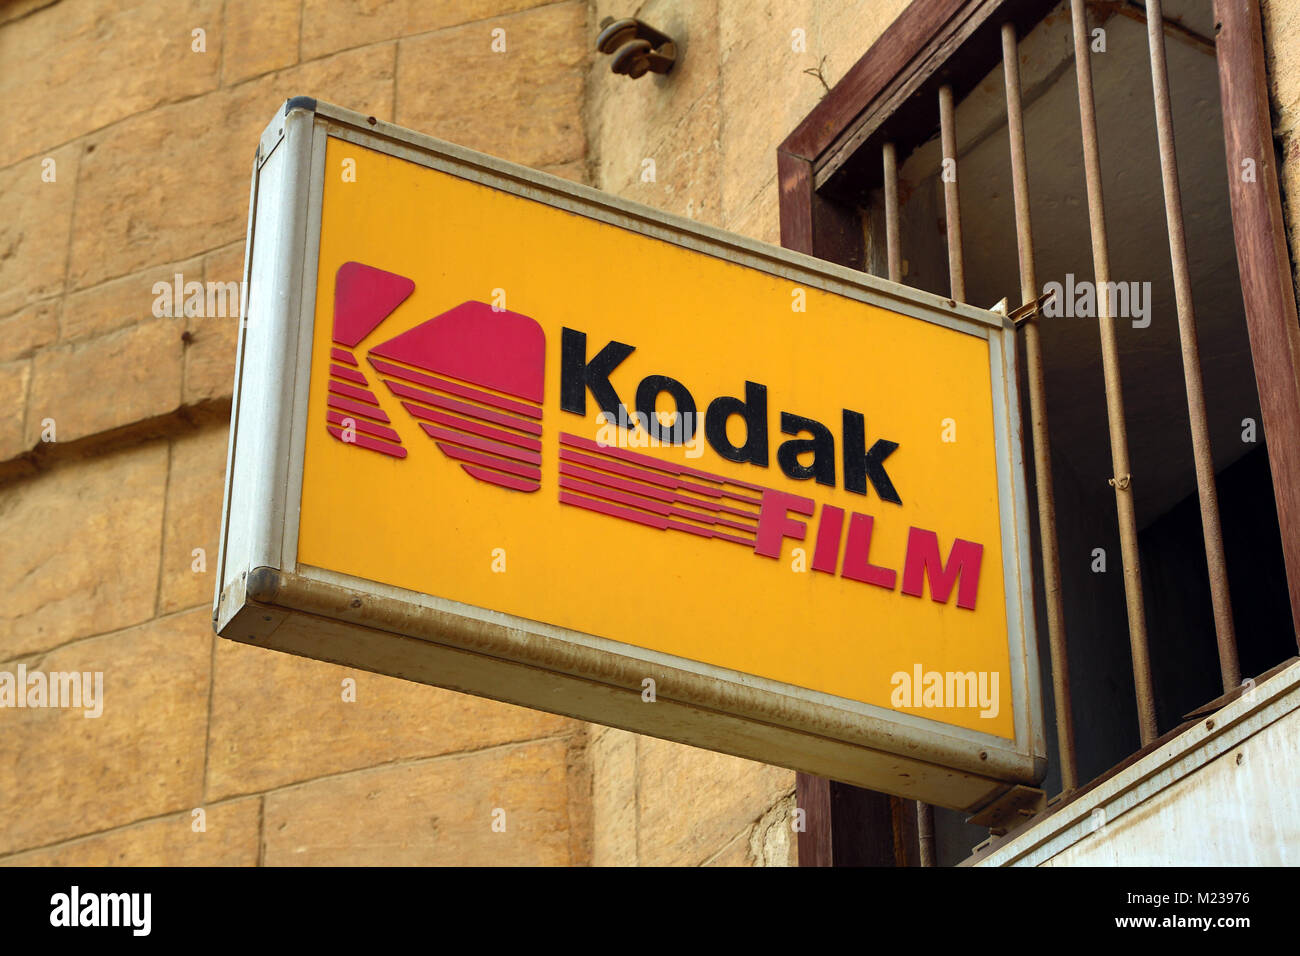 Kodak Film Werbung in Kairo, Ägypten Stockfoto